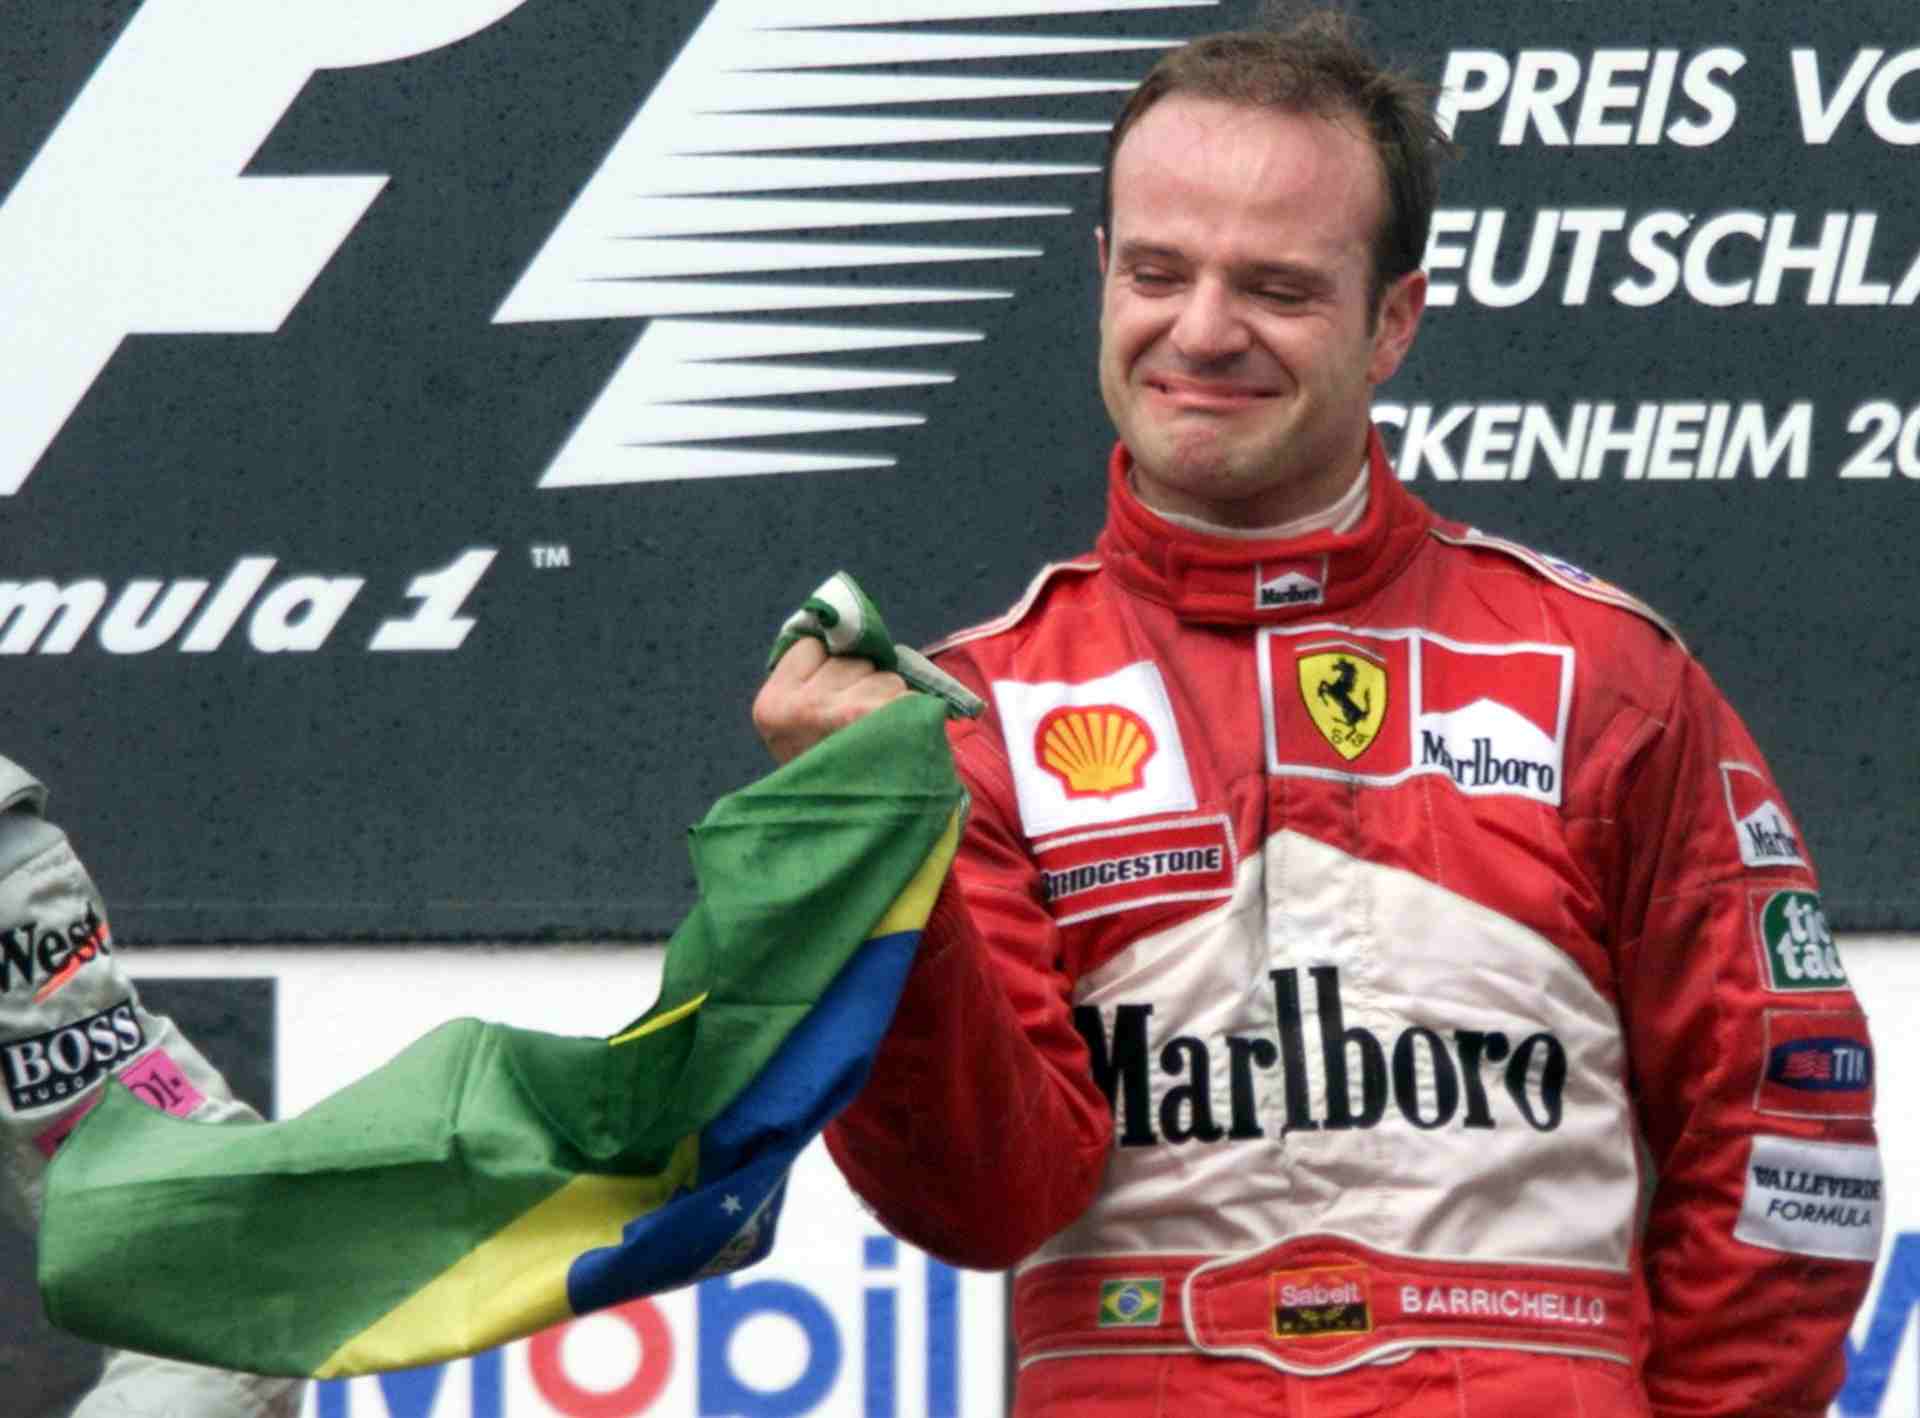 2º - Rubens Barrichello - Nacionalidade: Brasileiro - Quantidade de pódios conquistados com a Ferrari: 55